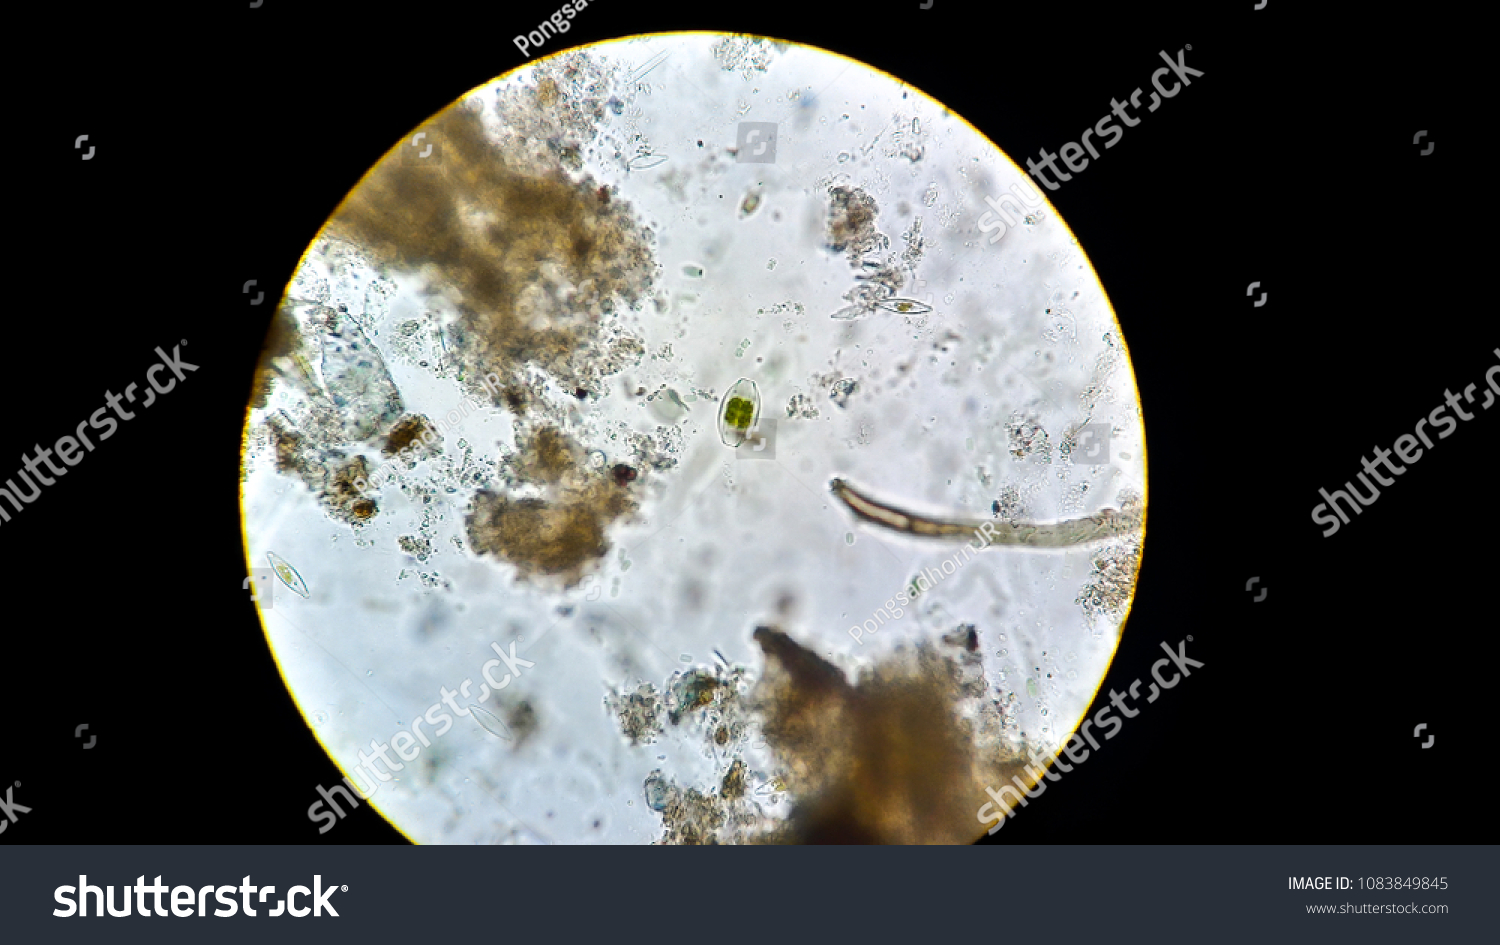 Diatom under microscope #1083849845